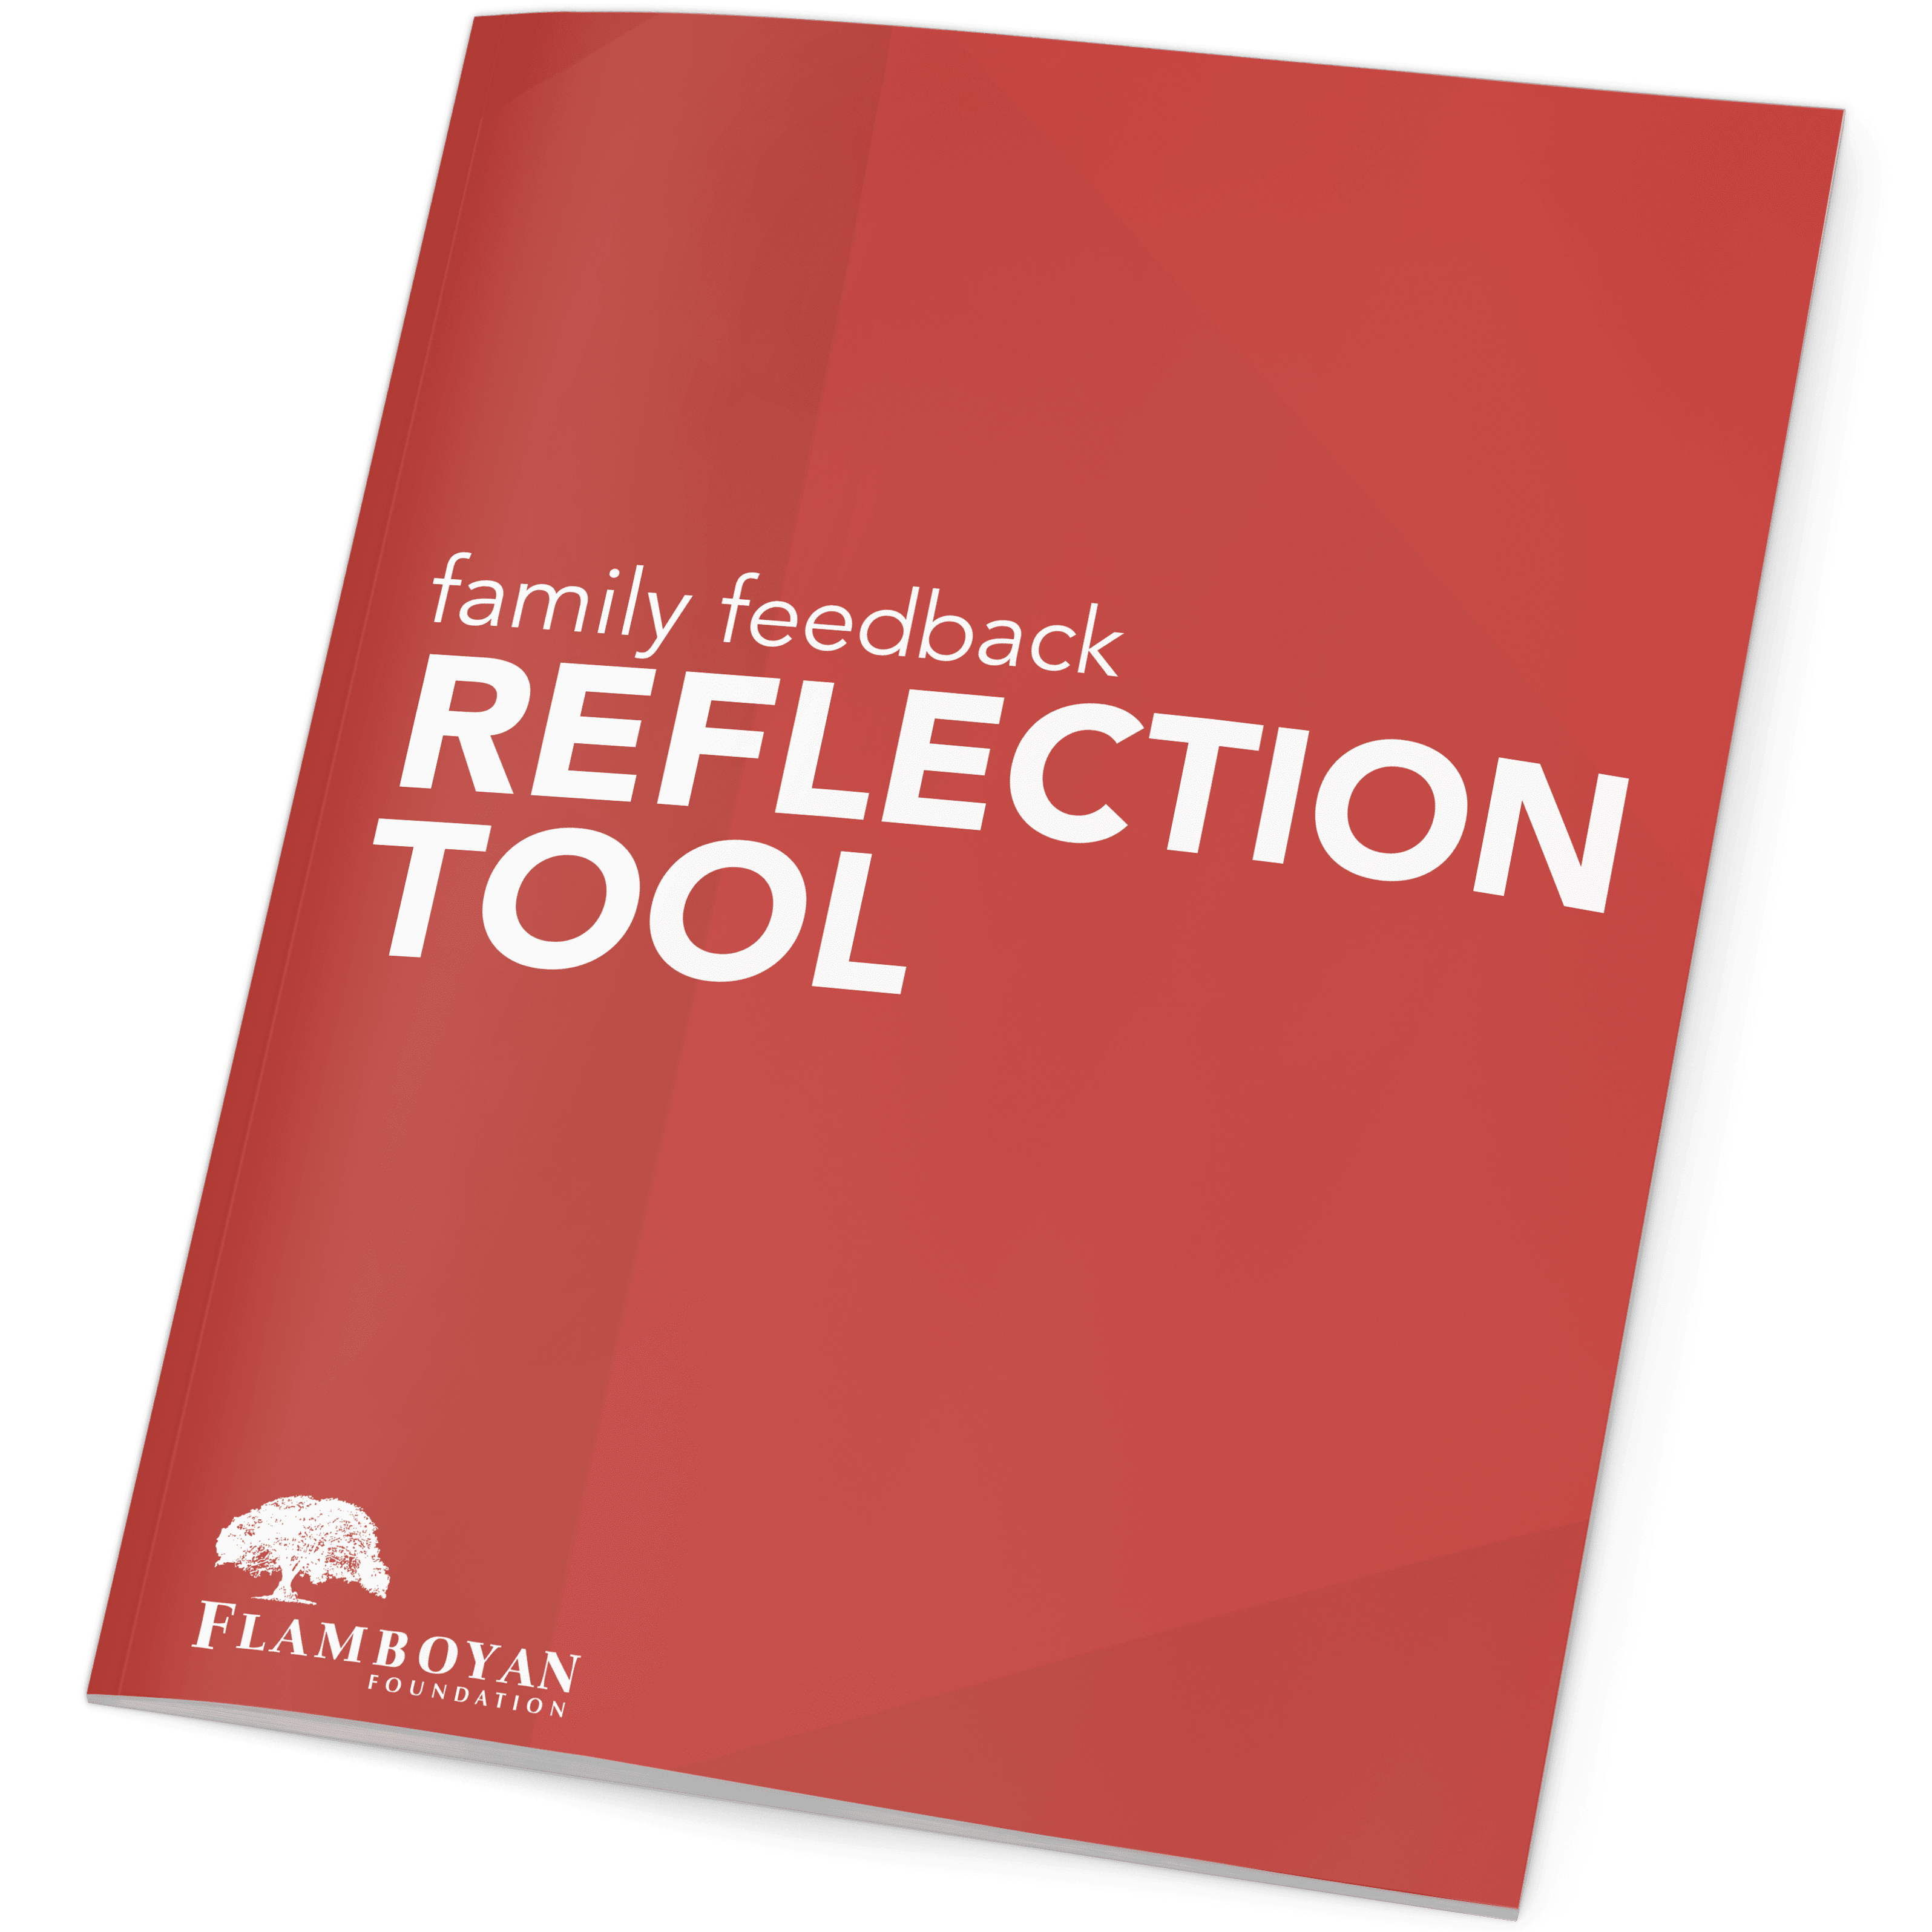 Family Feedback Reflection Tool by Flamboyan Foundation